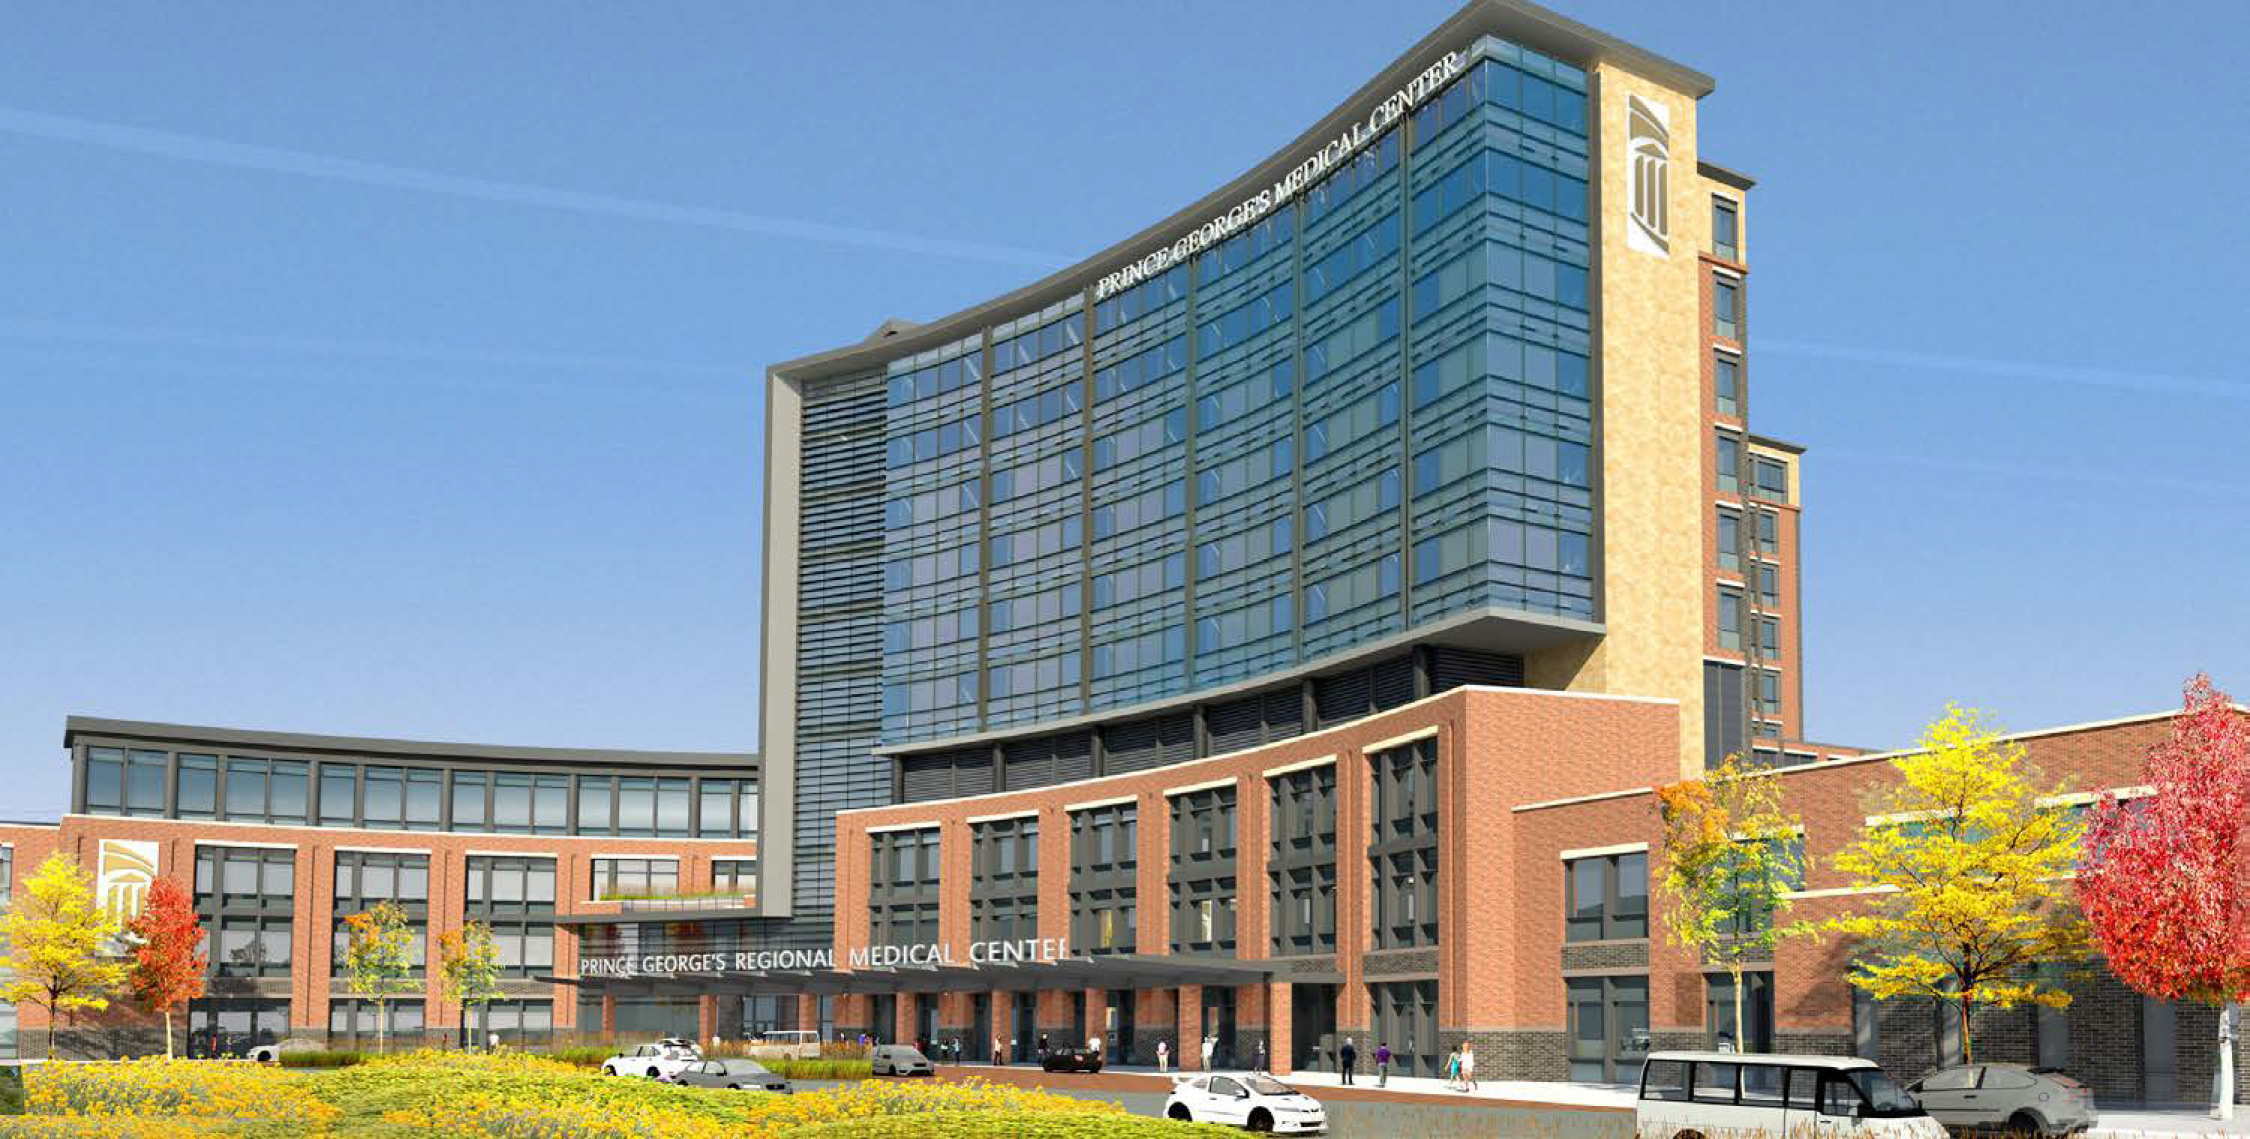 University Of Maryland Capital Region Medical Center The Elocen Group